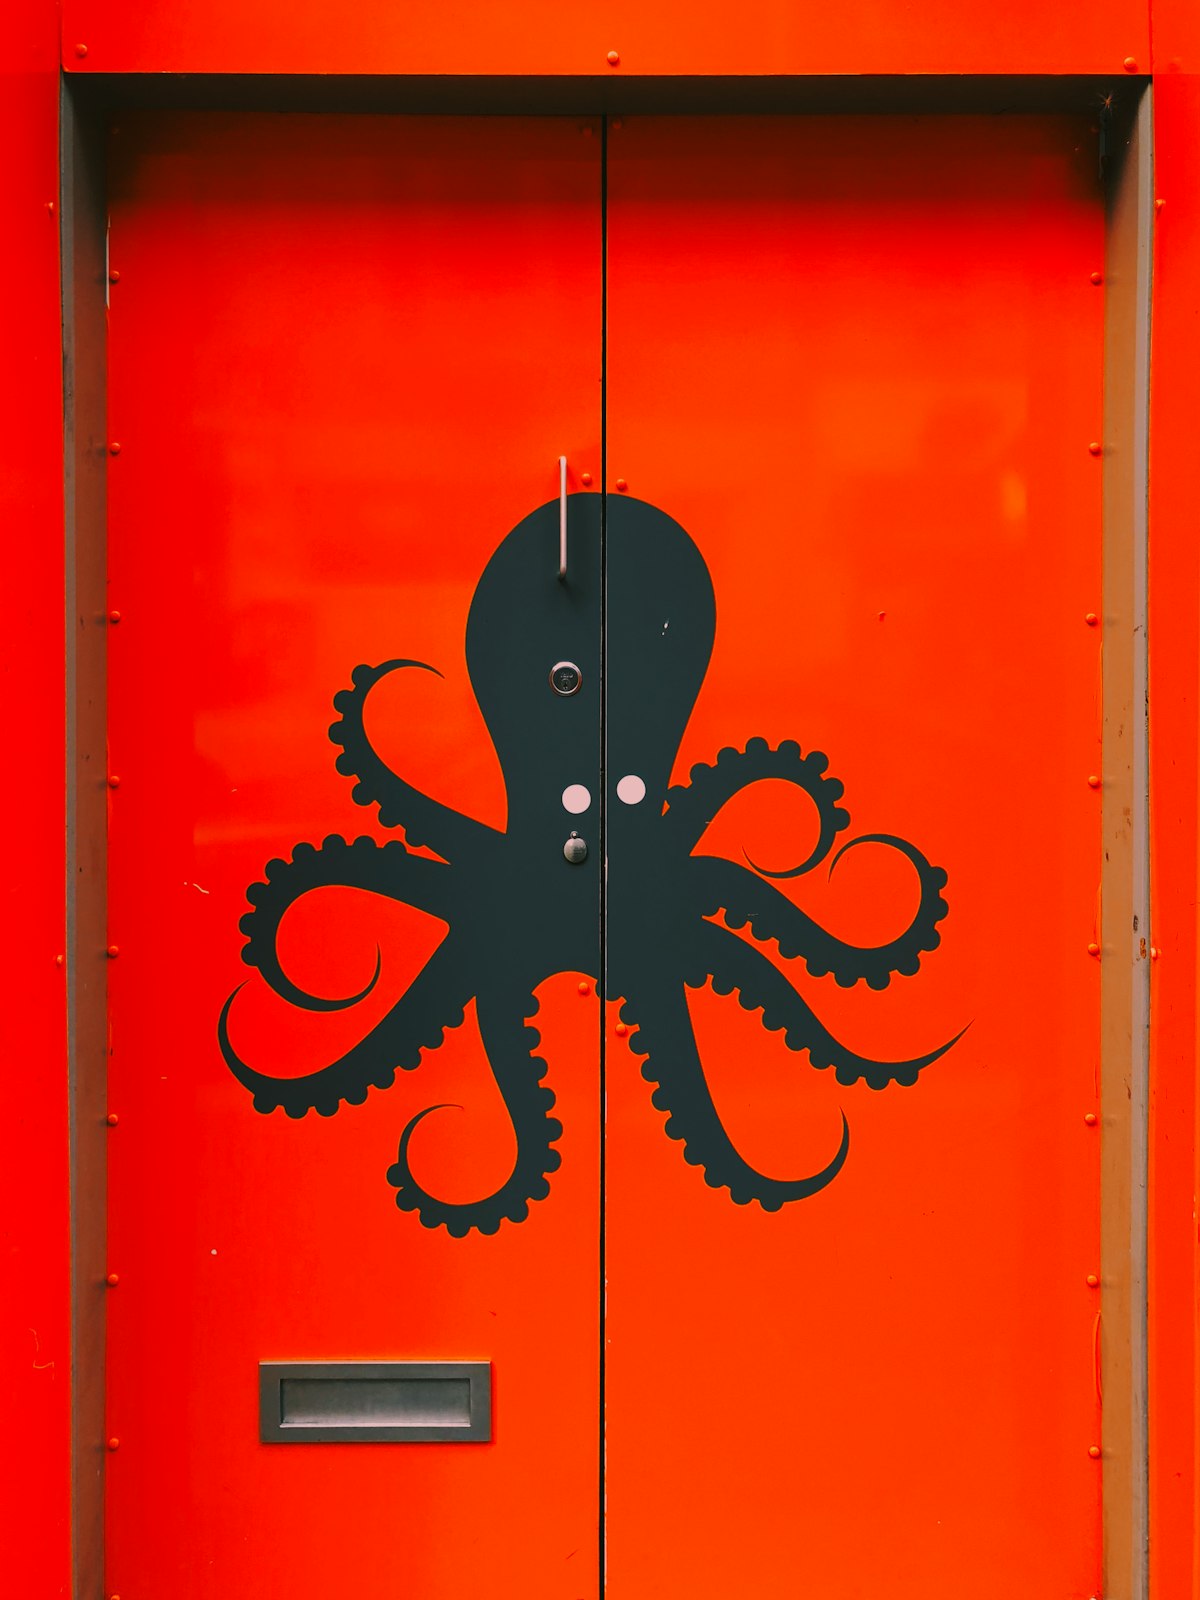 black octopus painted on red door